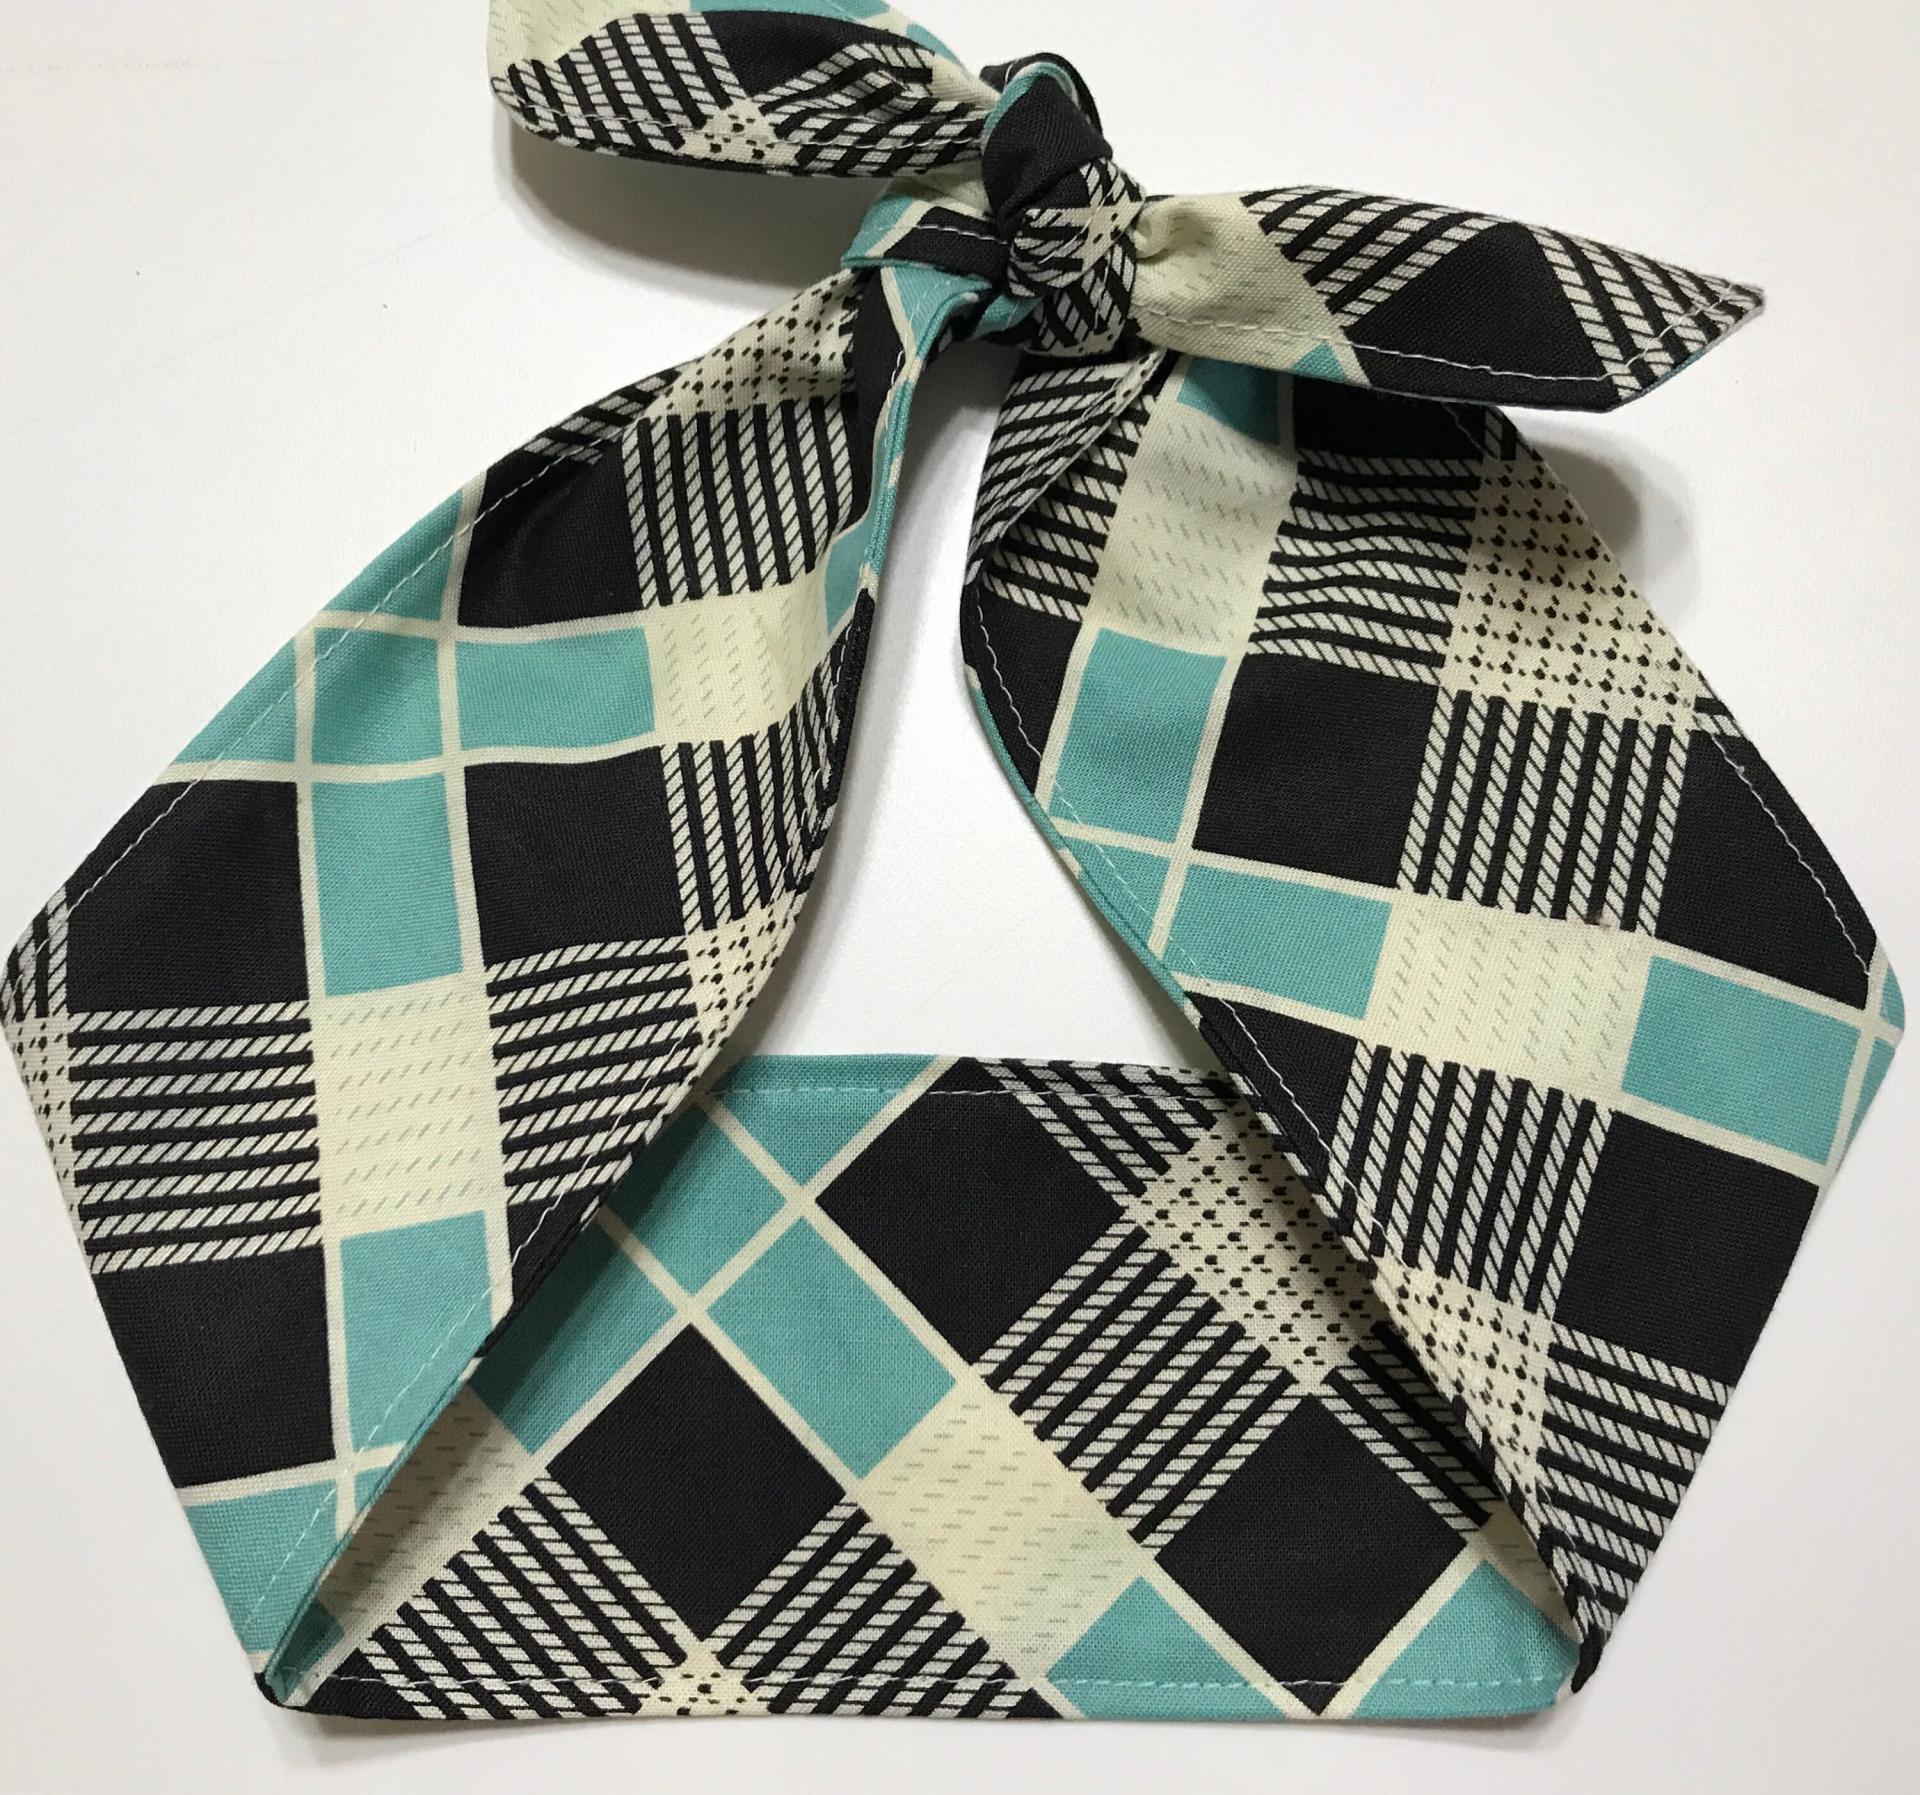 3” Wide Plaid headband, hair wrap, fabric headband, pin up, hair tie, neck, retro, rockabilly, purse or handbag scarf, 100% cotton